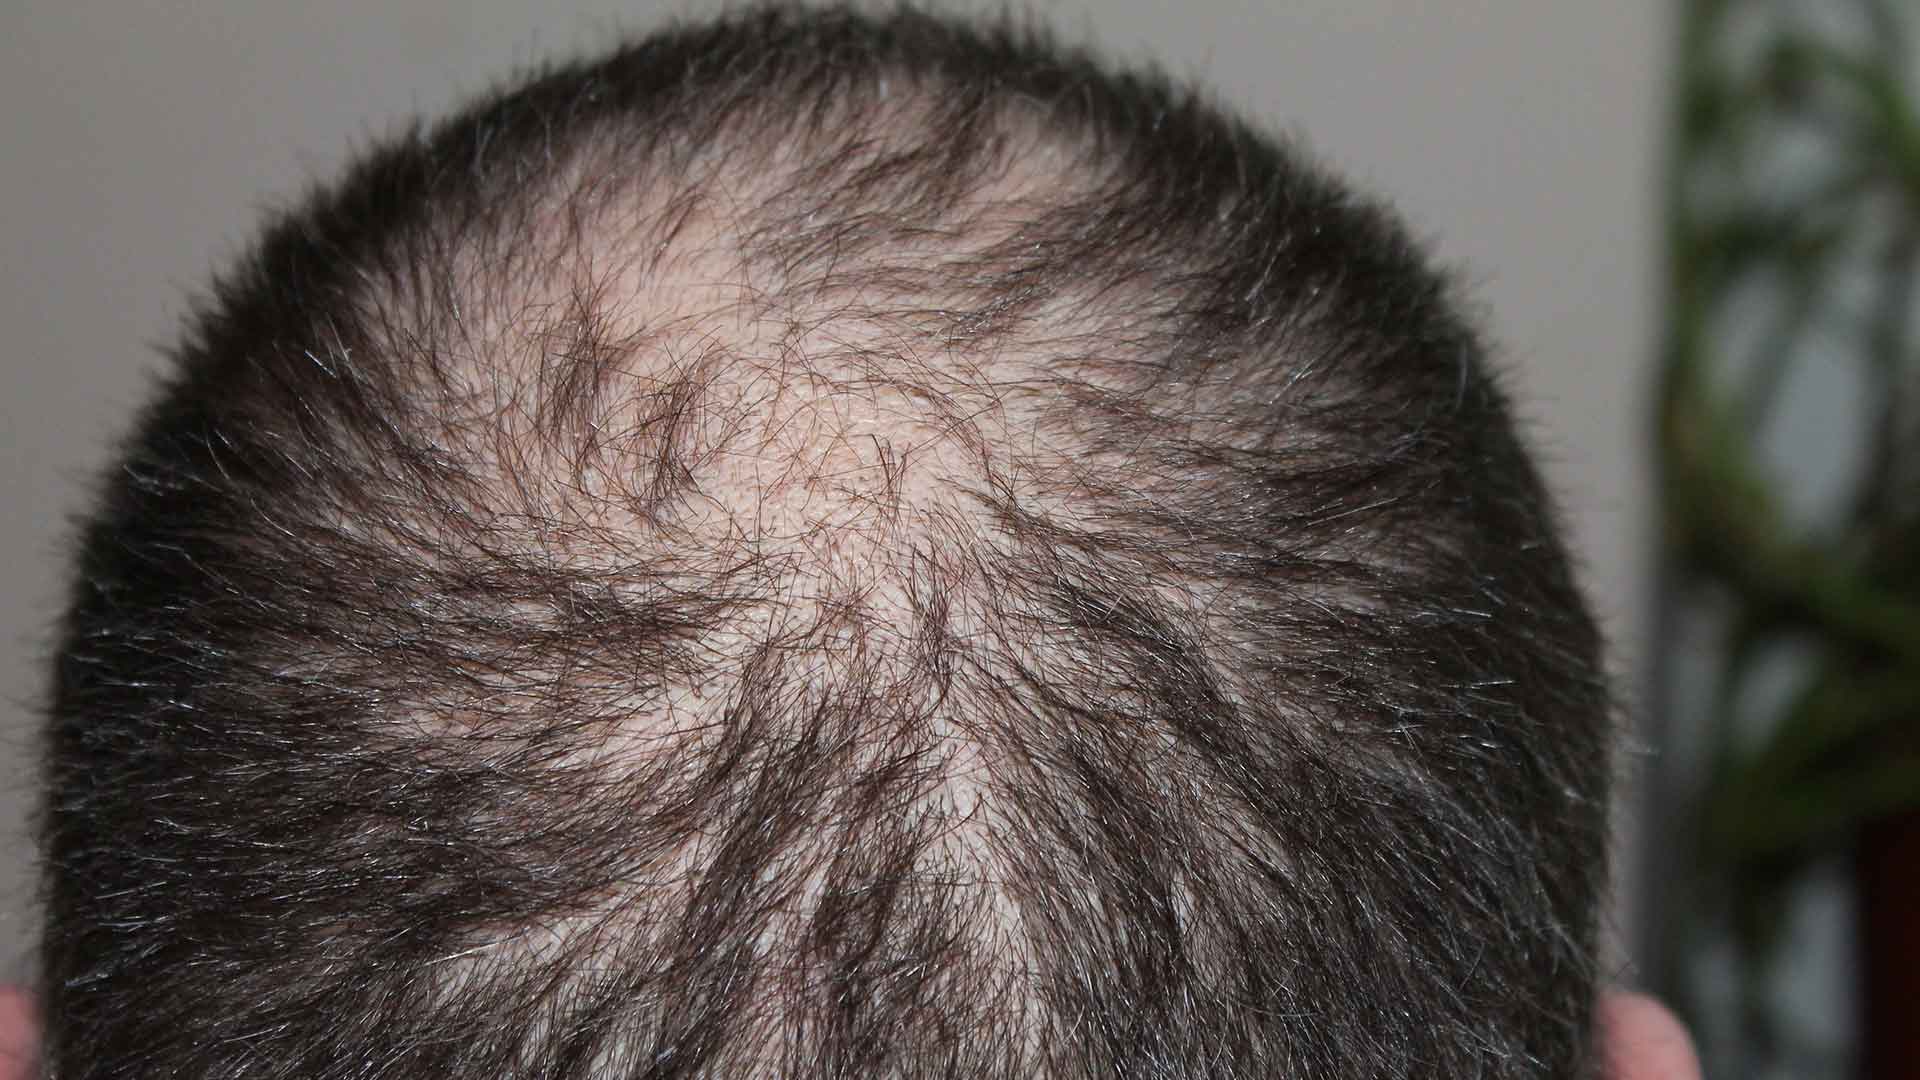 Mann mit diffusem Haarausfall